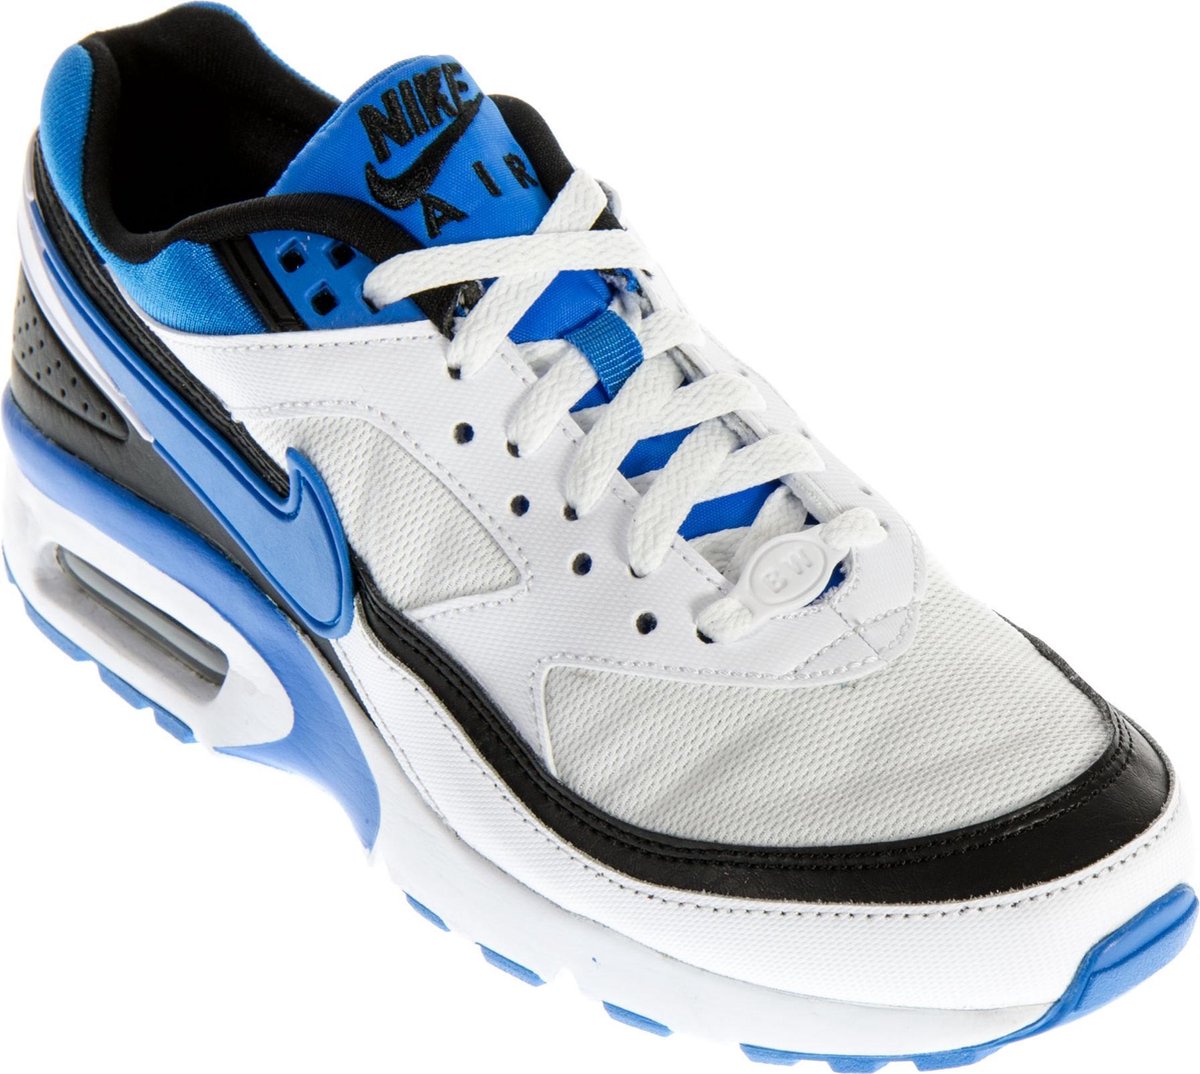 Onverschilligheid lelijk Versterker Nike Air Max BW (GS) Sneakers - Maat 40 - Meisjes - wit/blauw/zwart |  bol.com